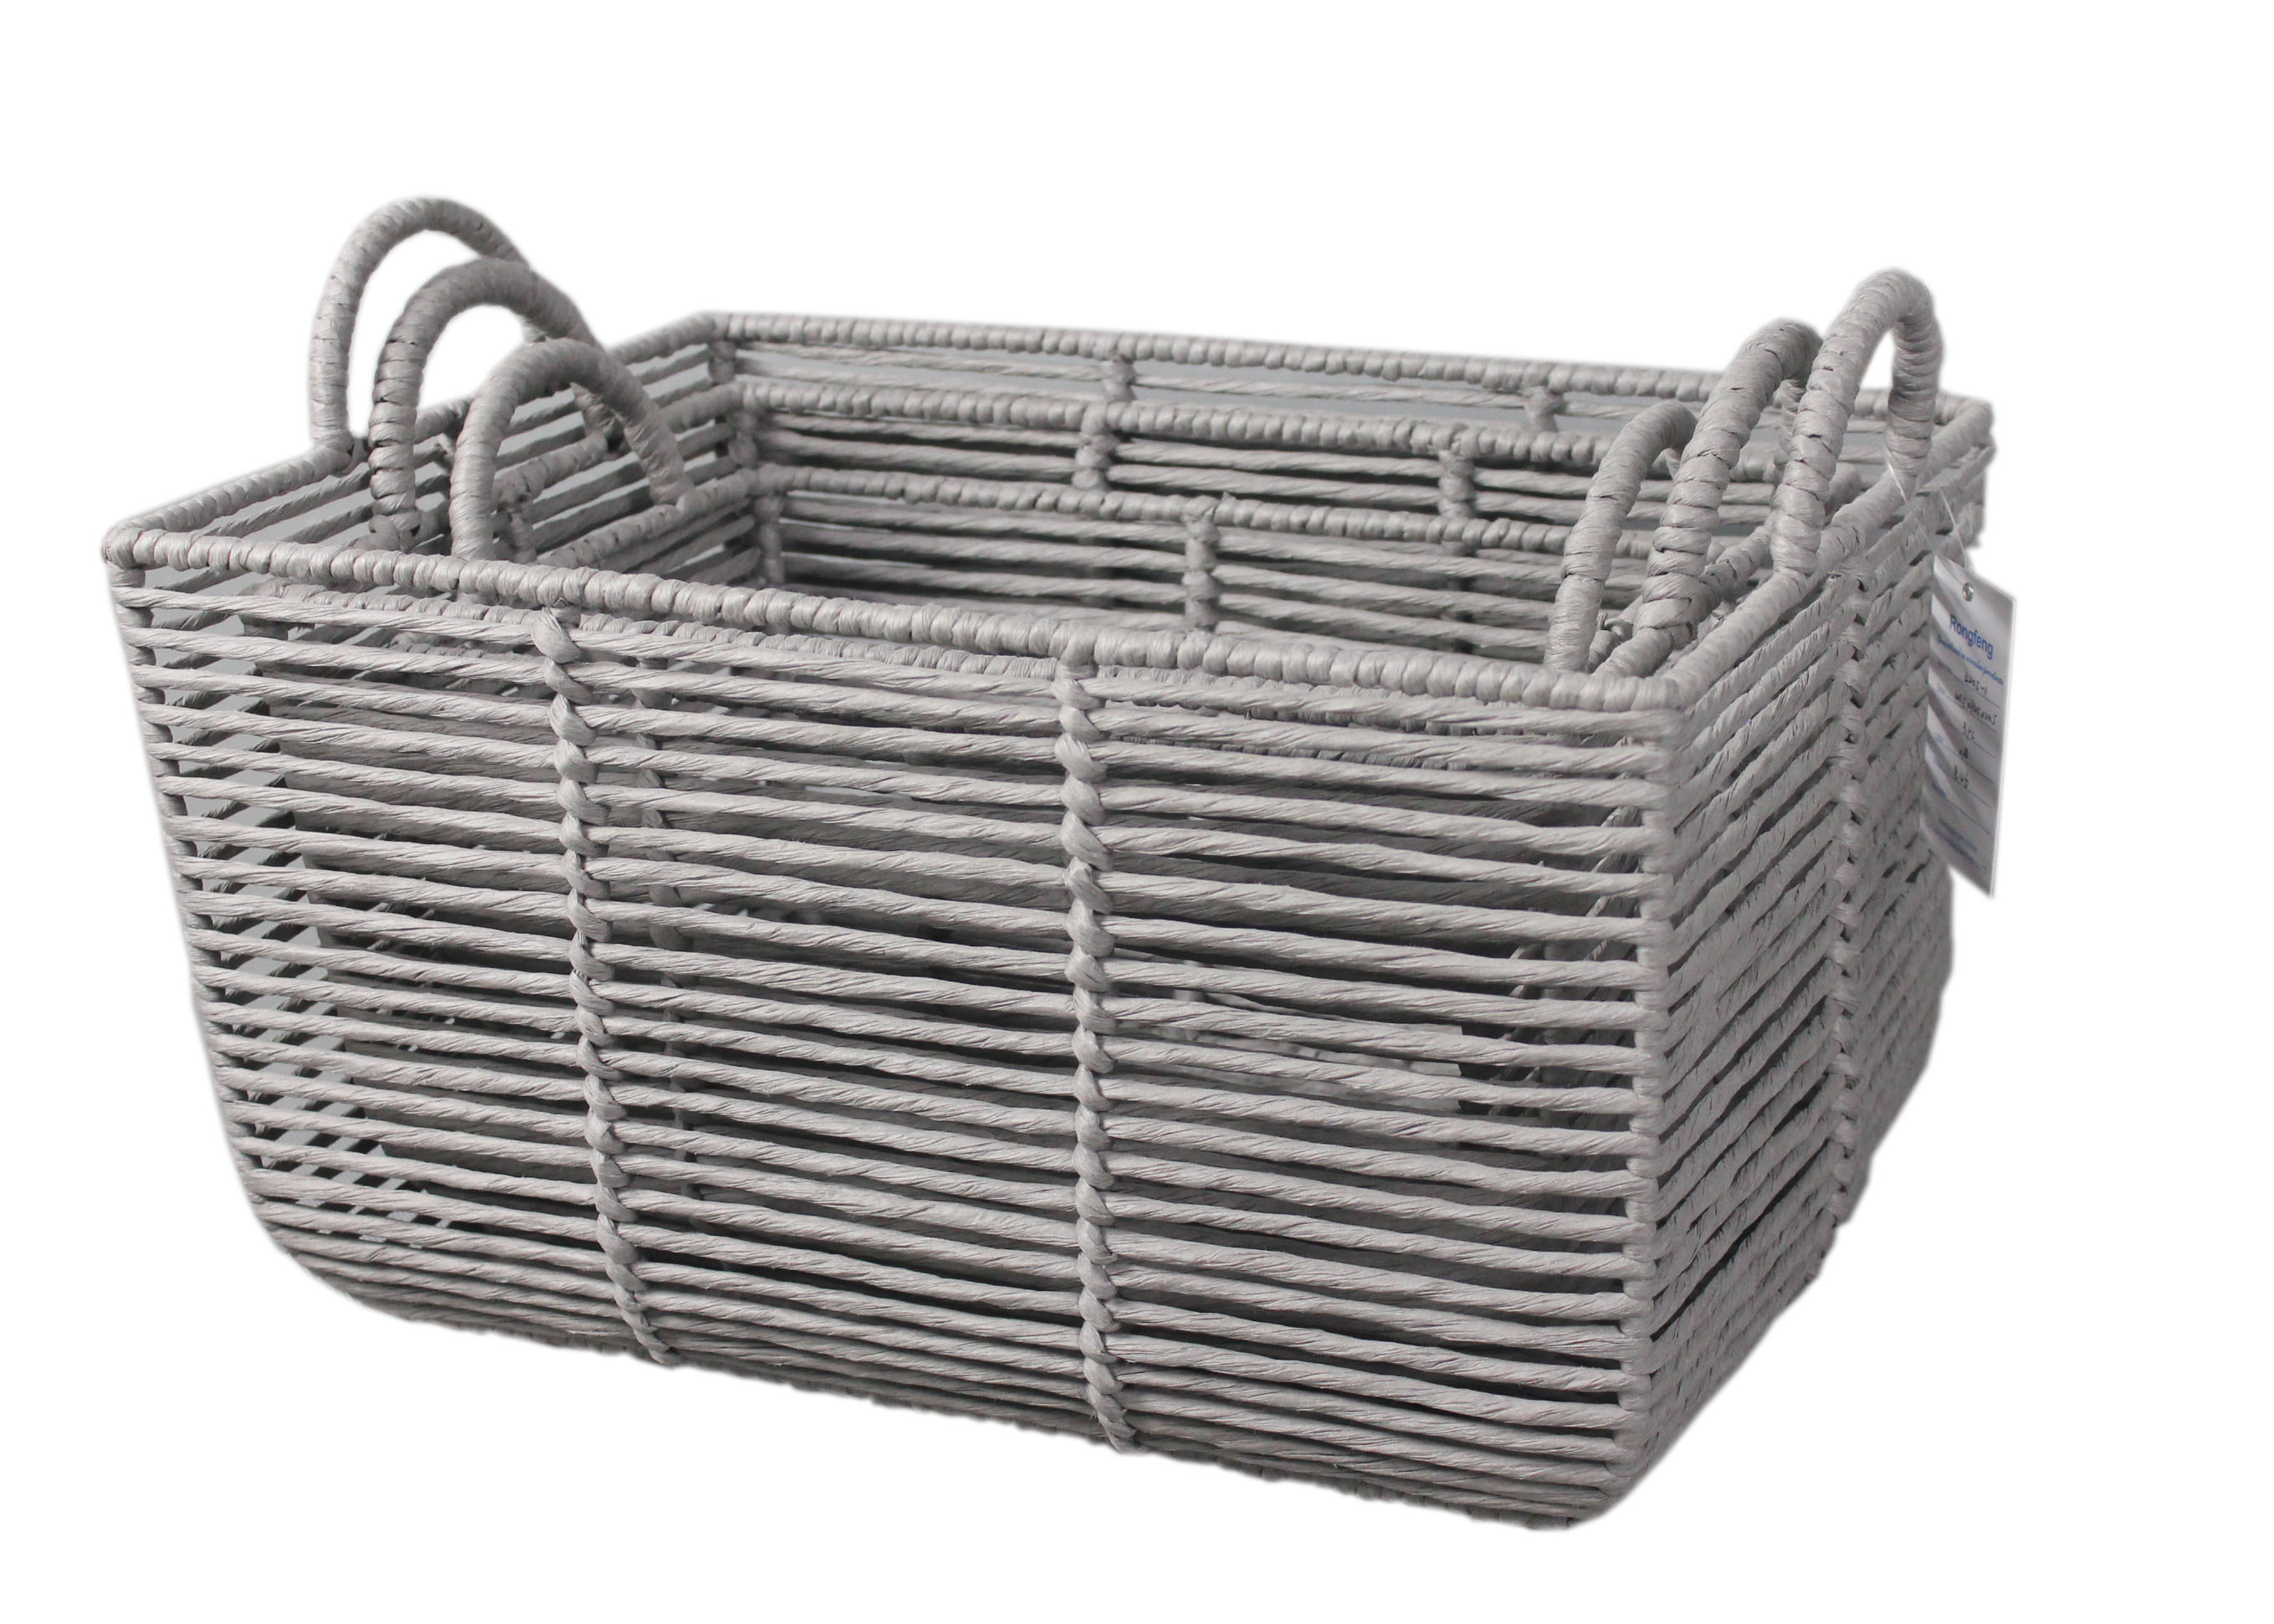 Basket , Laundry basket, Toy storage-4205-1